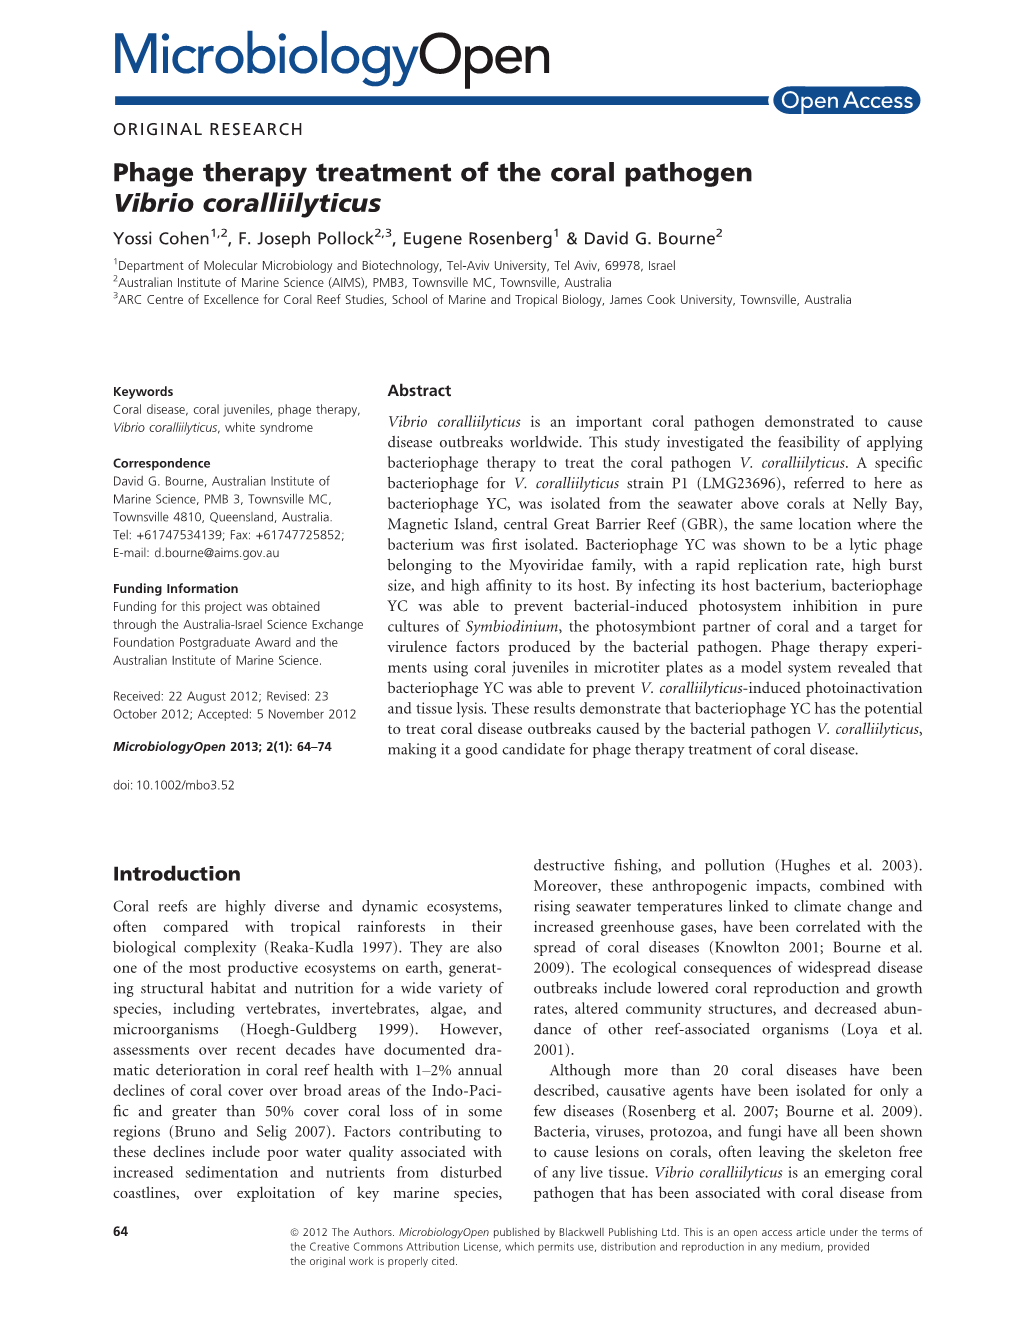 Phage Therapy Treatment of the Coral Pathogen Vibrio Coralliilyticus